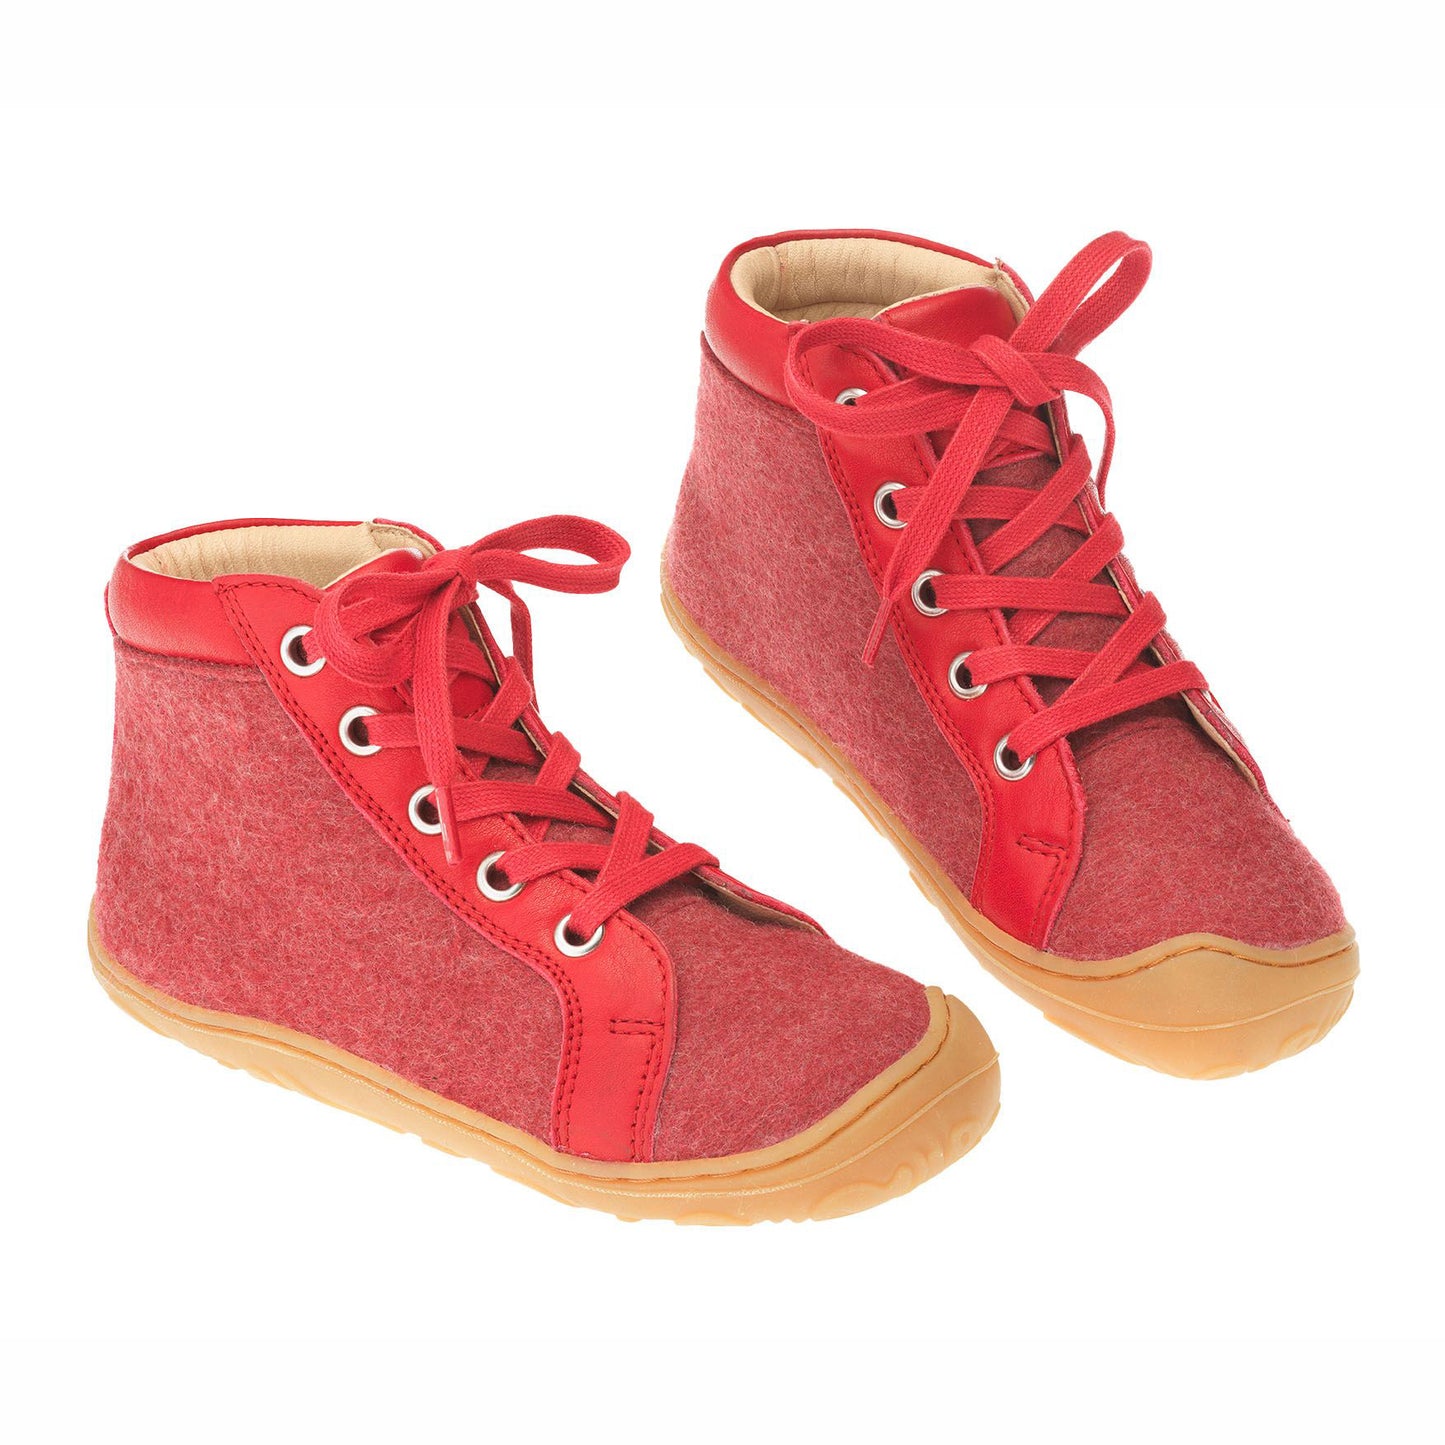 Disana organic wool felt toddler shoes